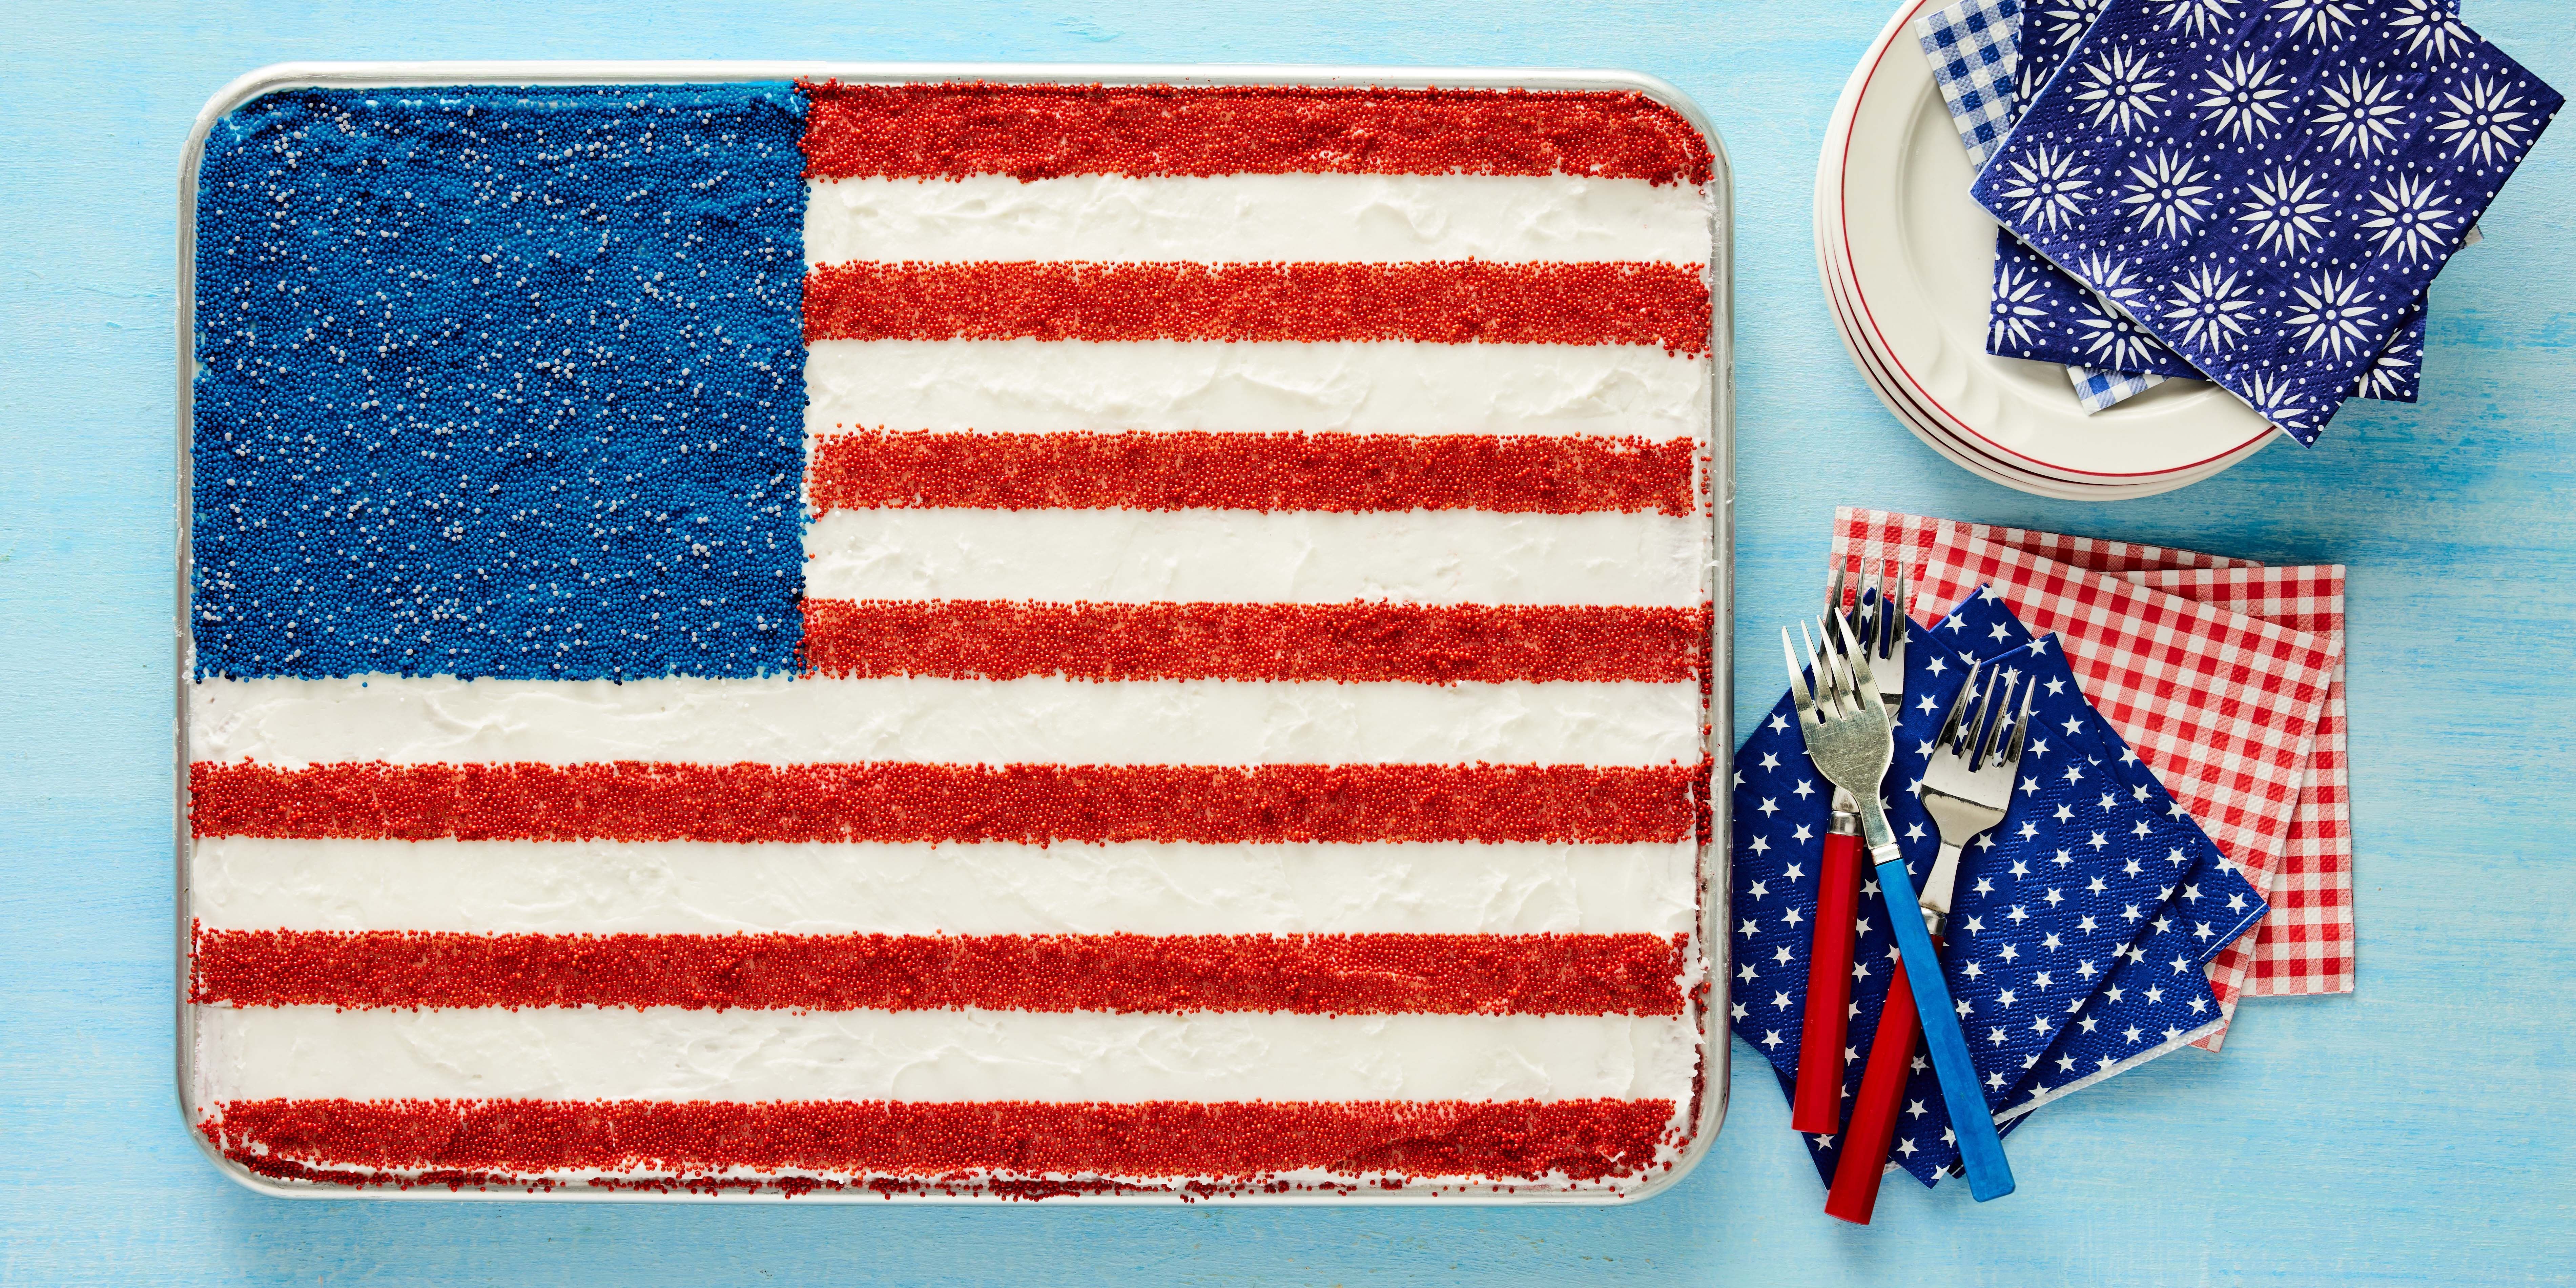 American Flag Cake - Lucky Leaf